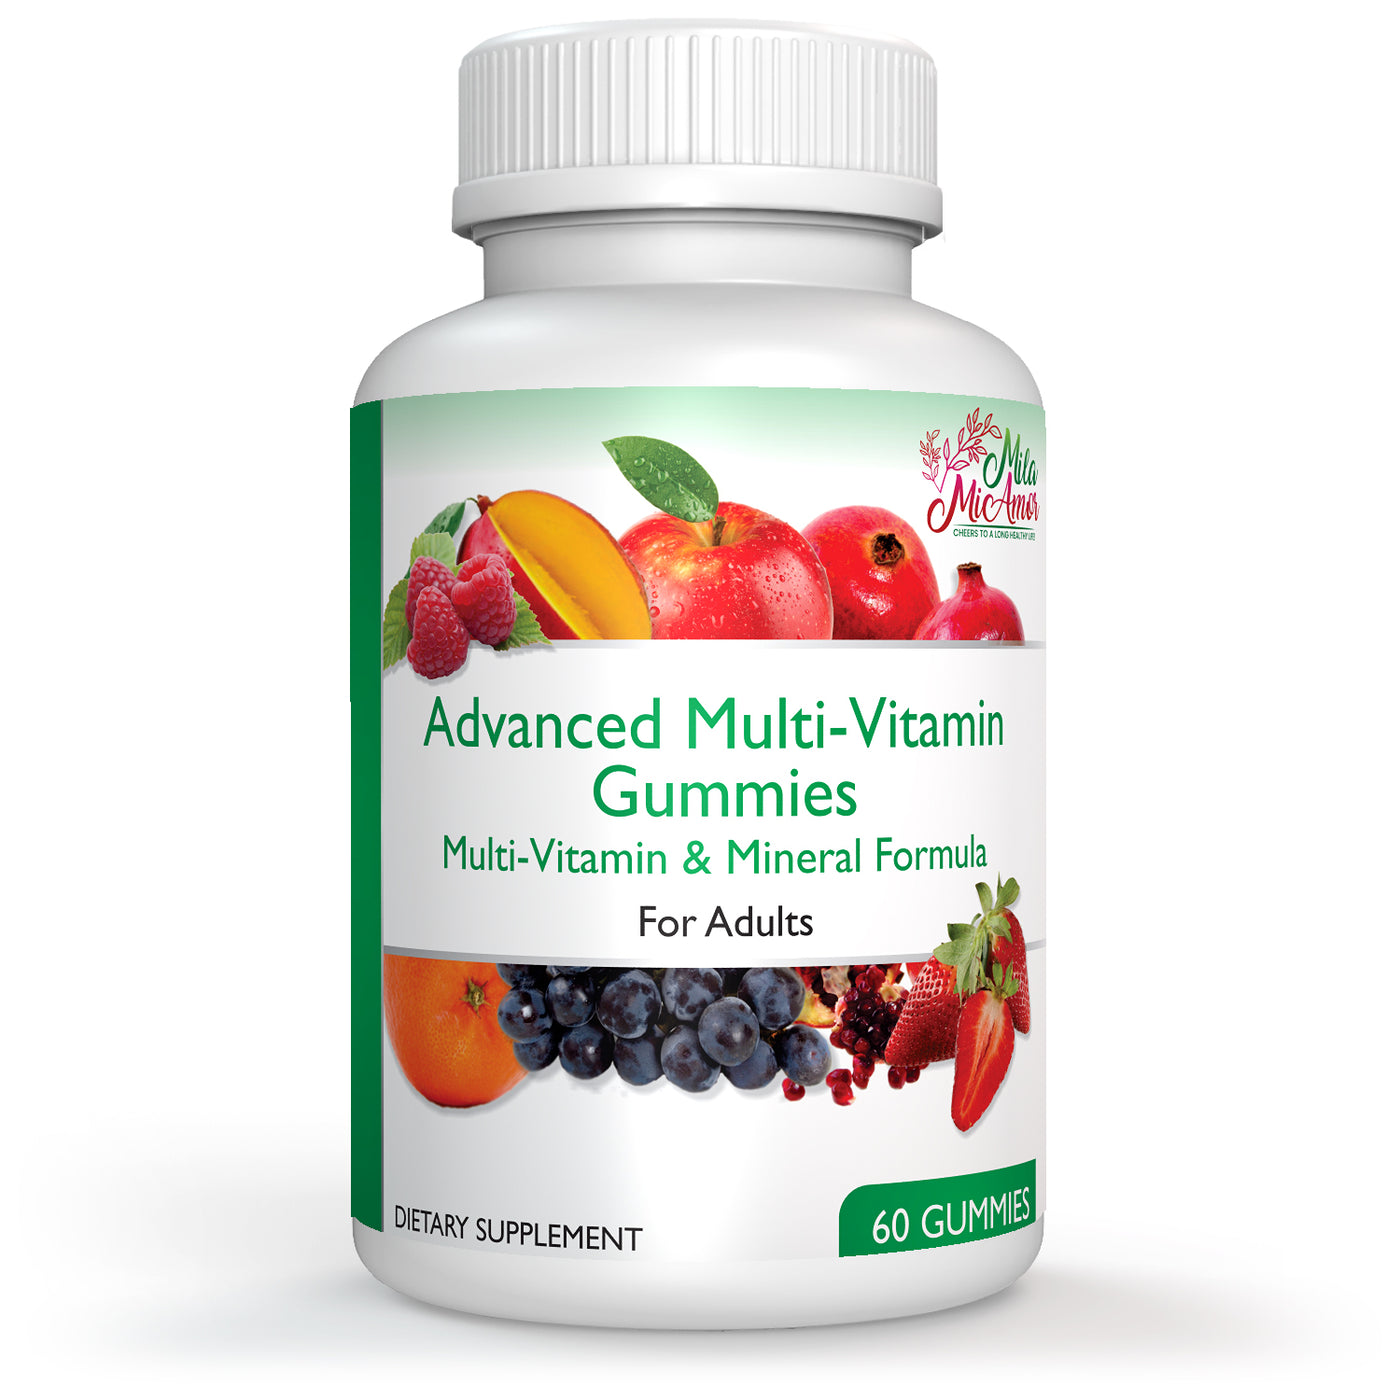 Advanced Multi-Vitamin Gummies for Adults